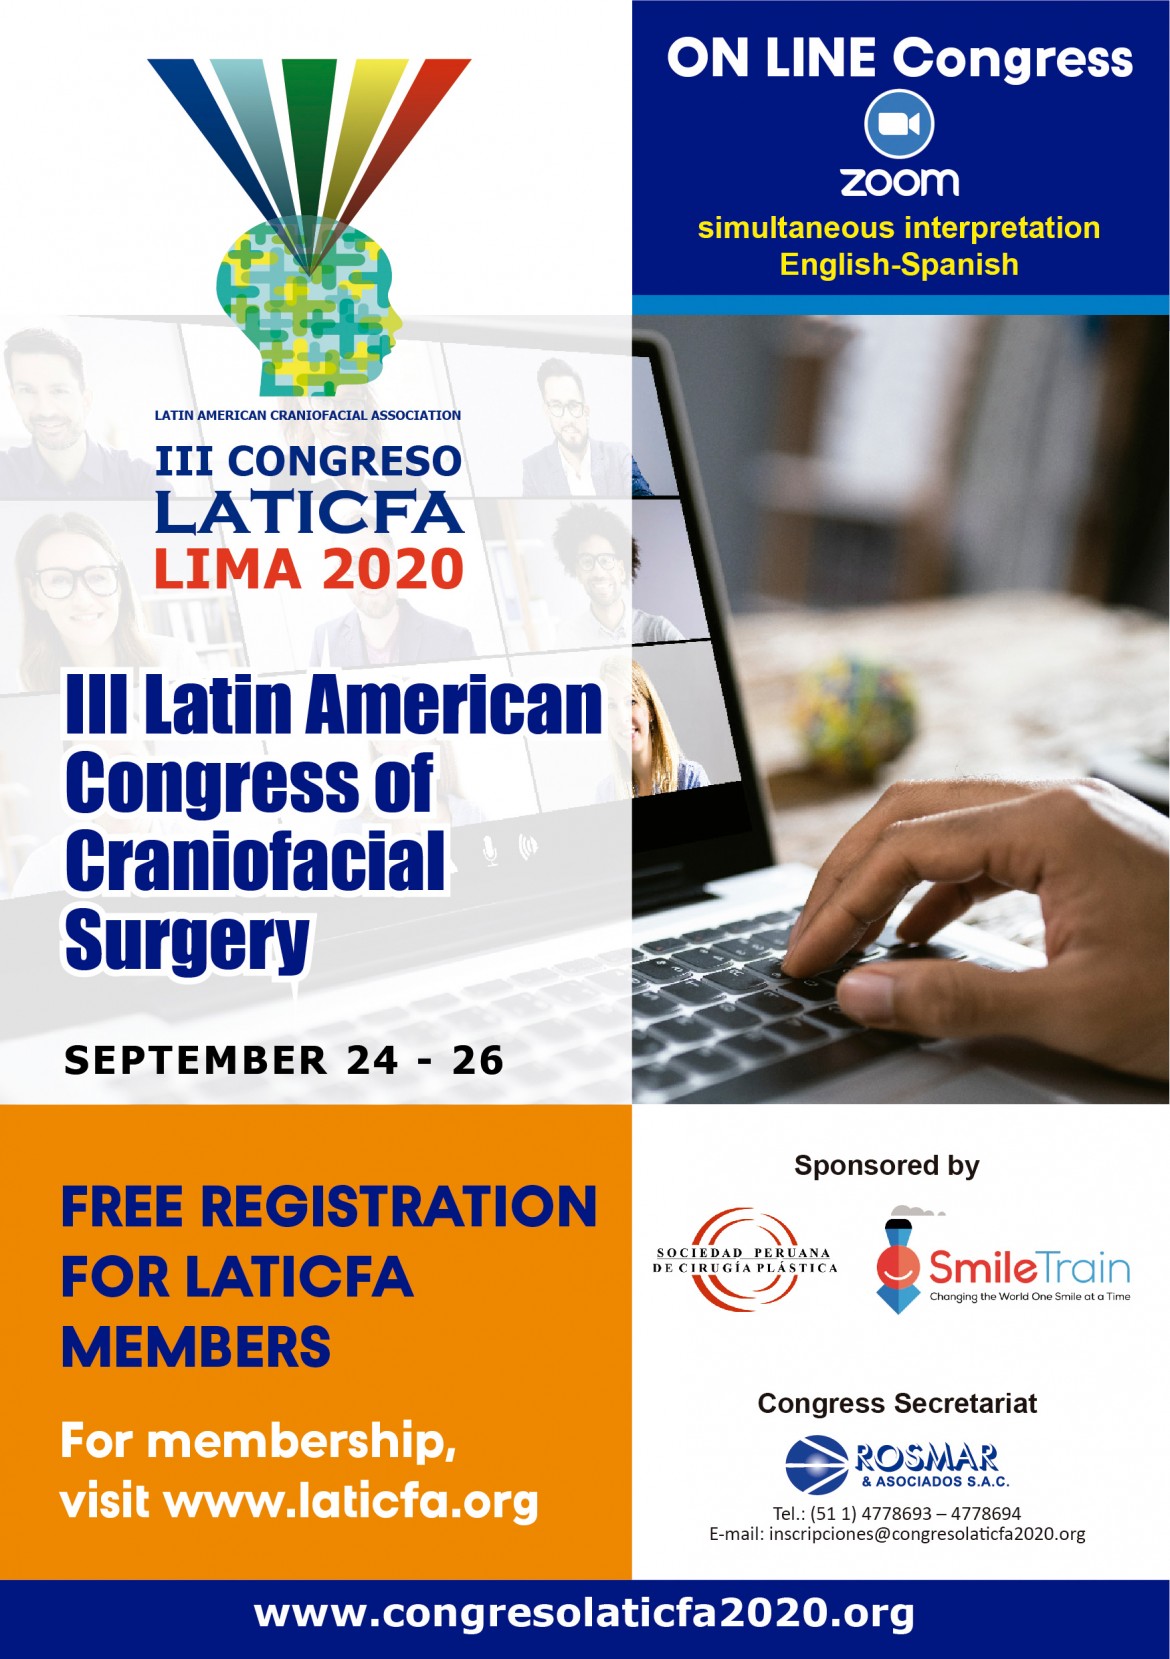 Latin American Craniofacial Association (LATICFA) organiza el “III Latin American Congress of Craniofacial Surgery” - Dr. Carlos Giugliano